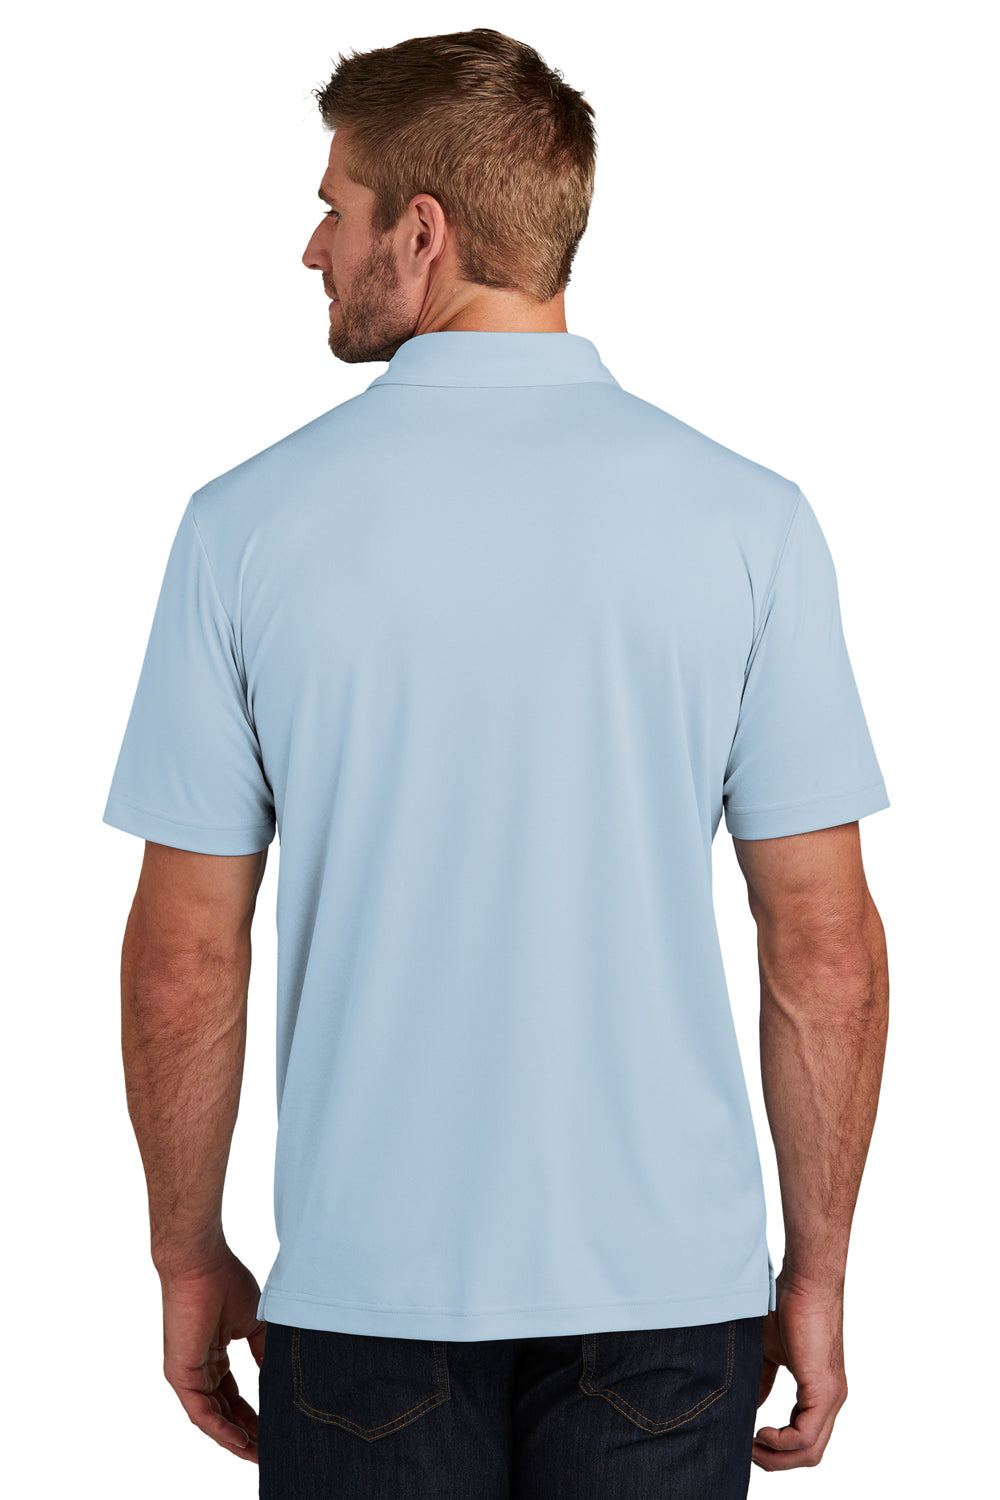 TravisMathew TM1MY400 Mens Coto Performance Wrinkle Resistant Short Sleeve Polo Shirt Heather Kentucky Blue Model Back